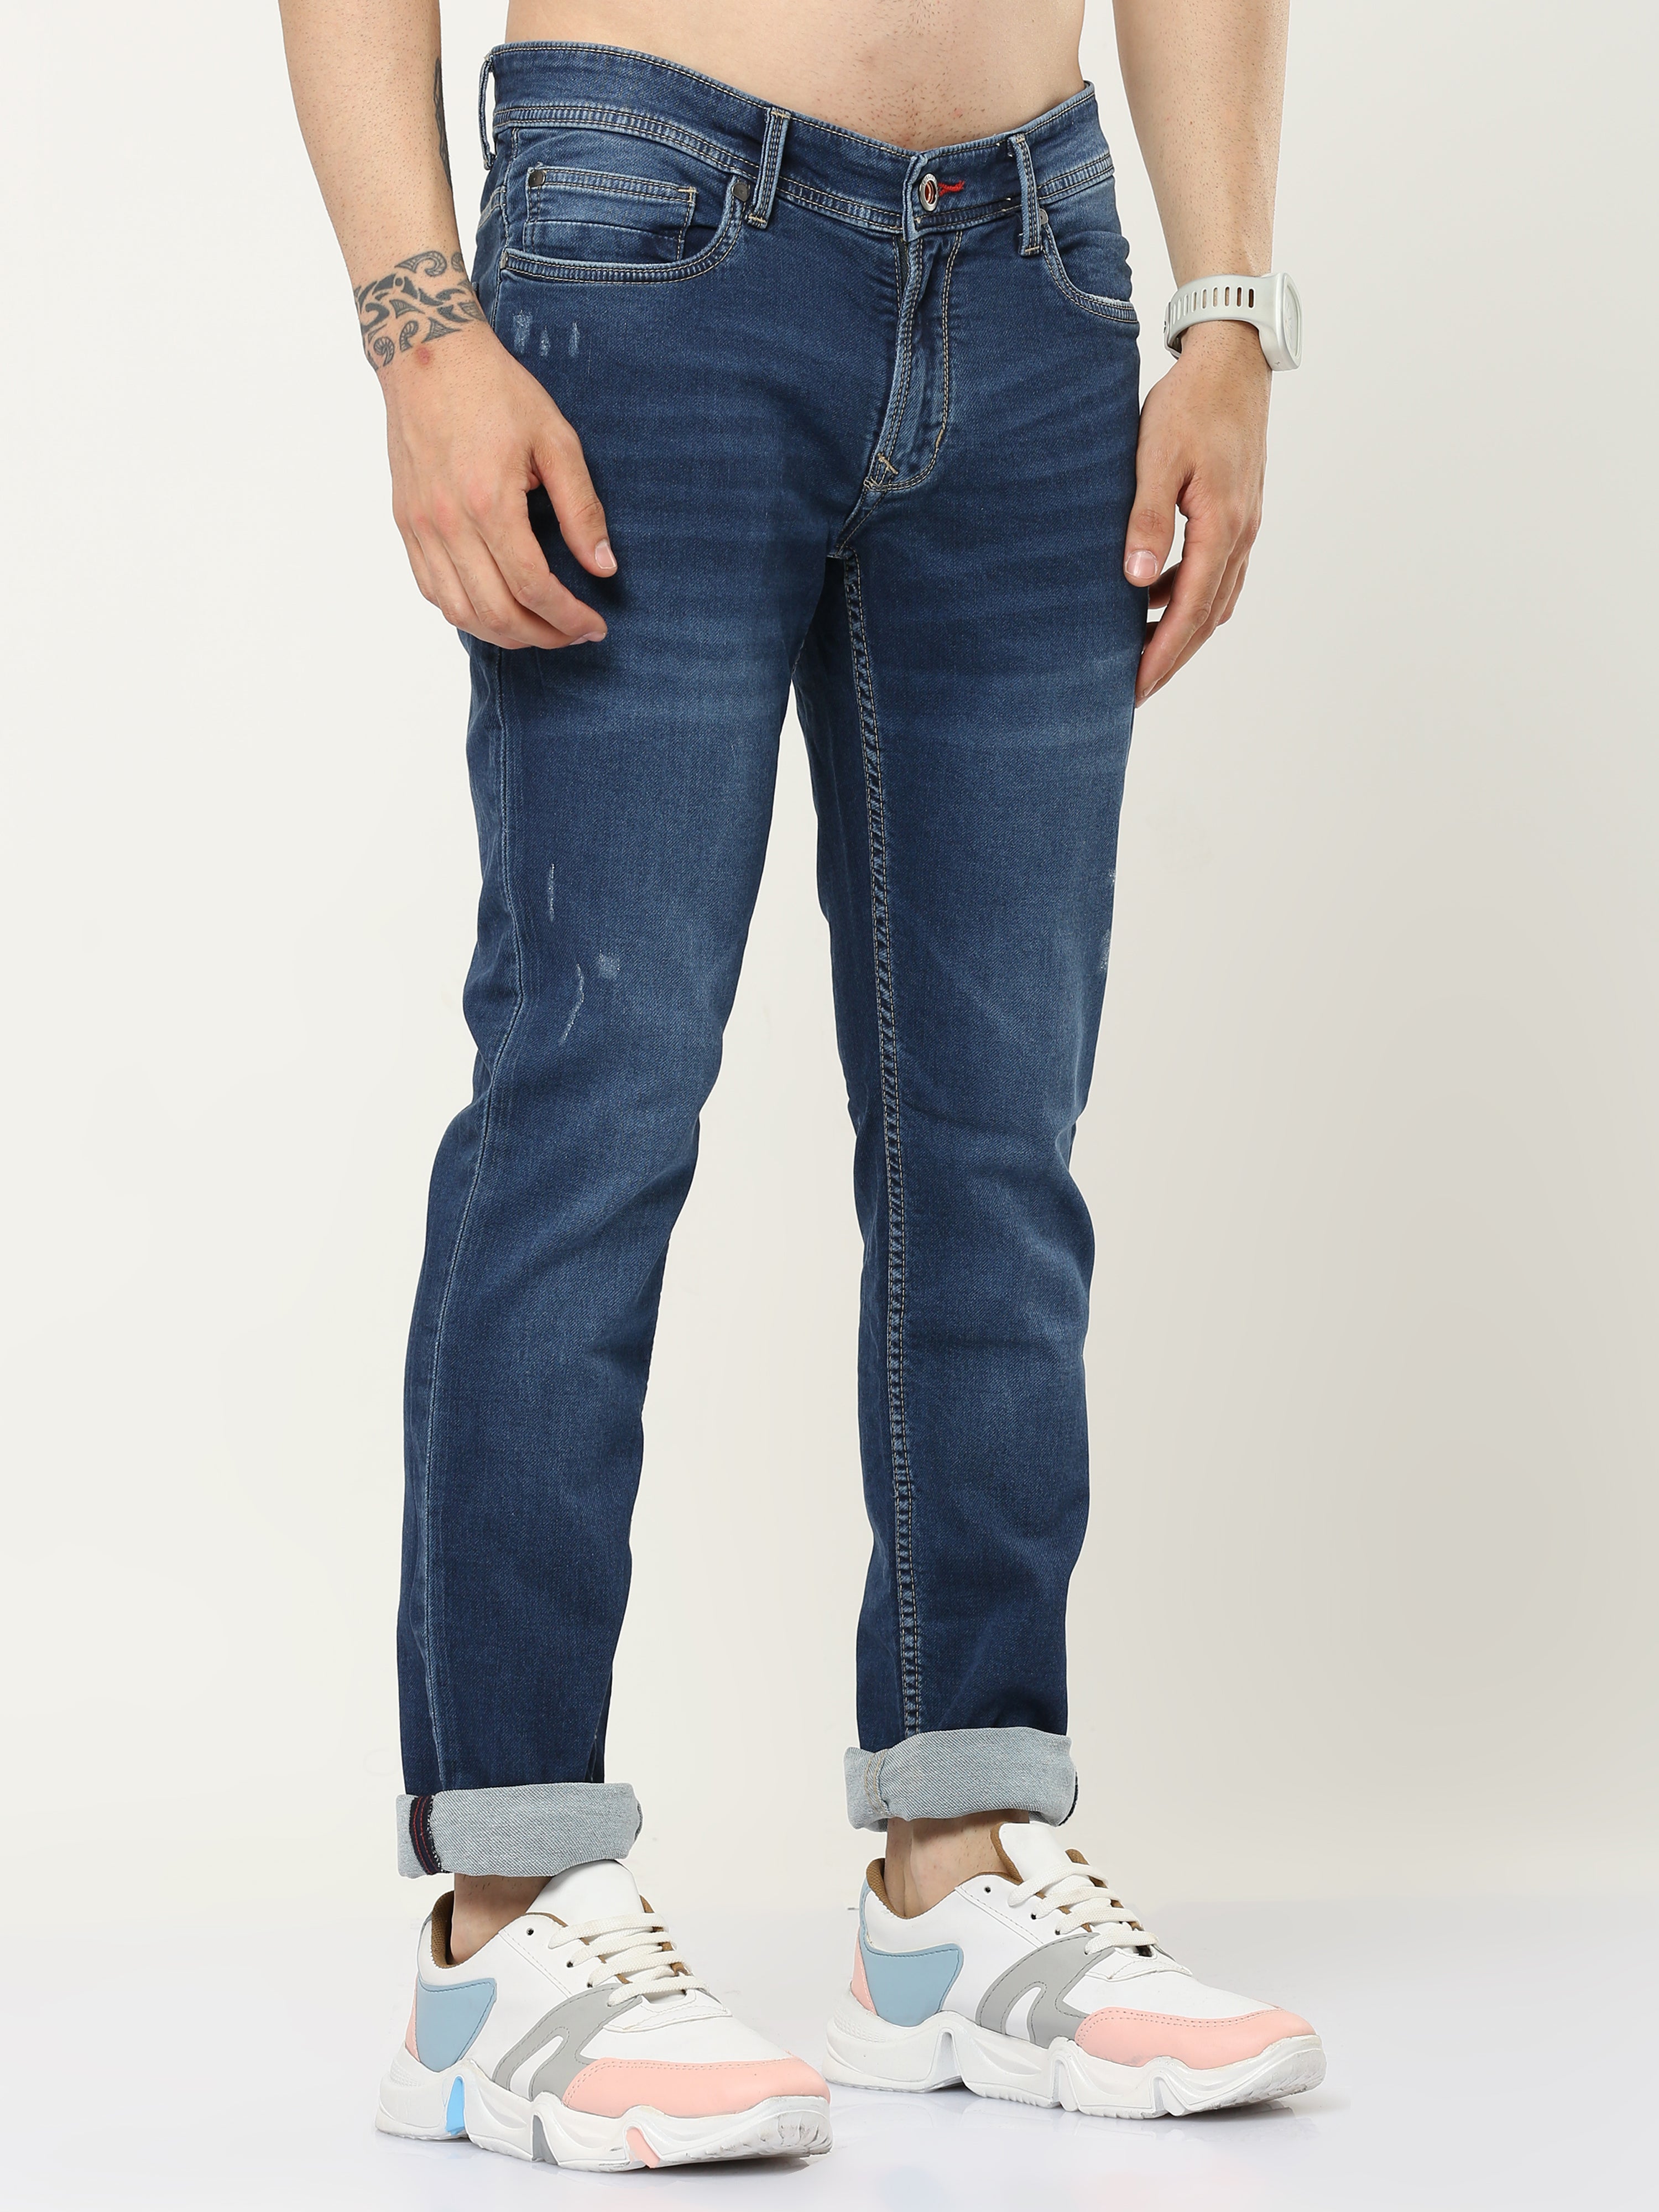 UltimaFit Men's Slim Fit Jeans